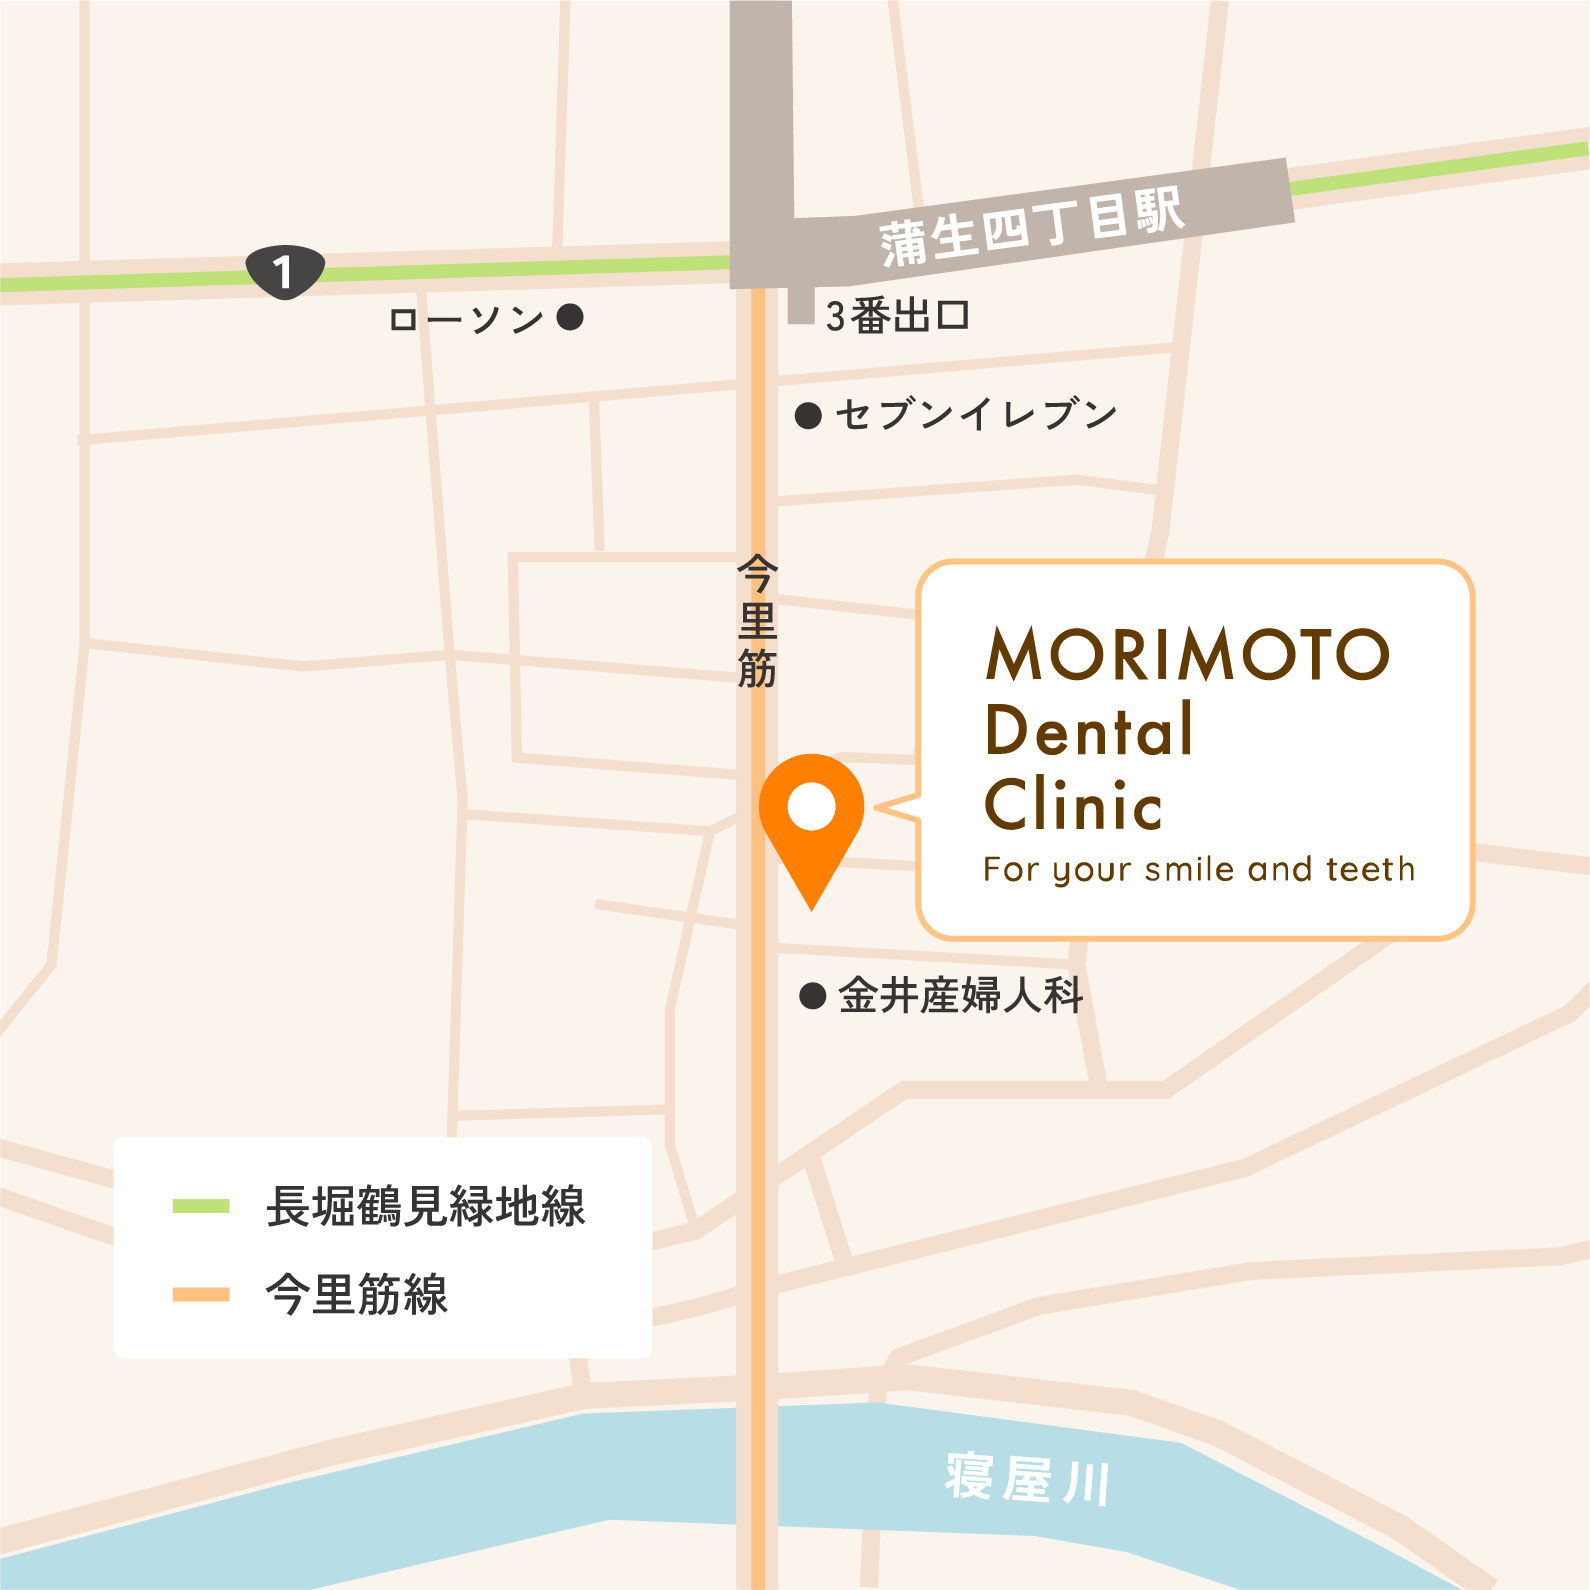 MORIMOTO Dental Clinic.